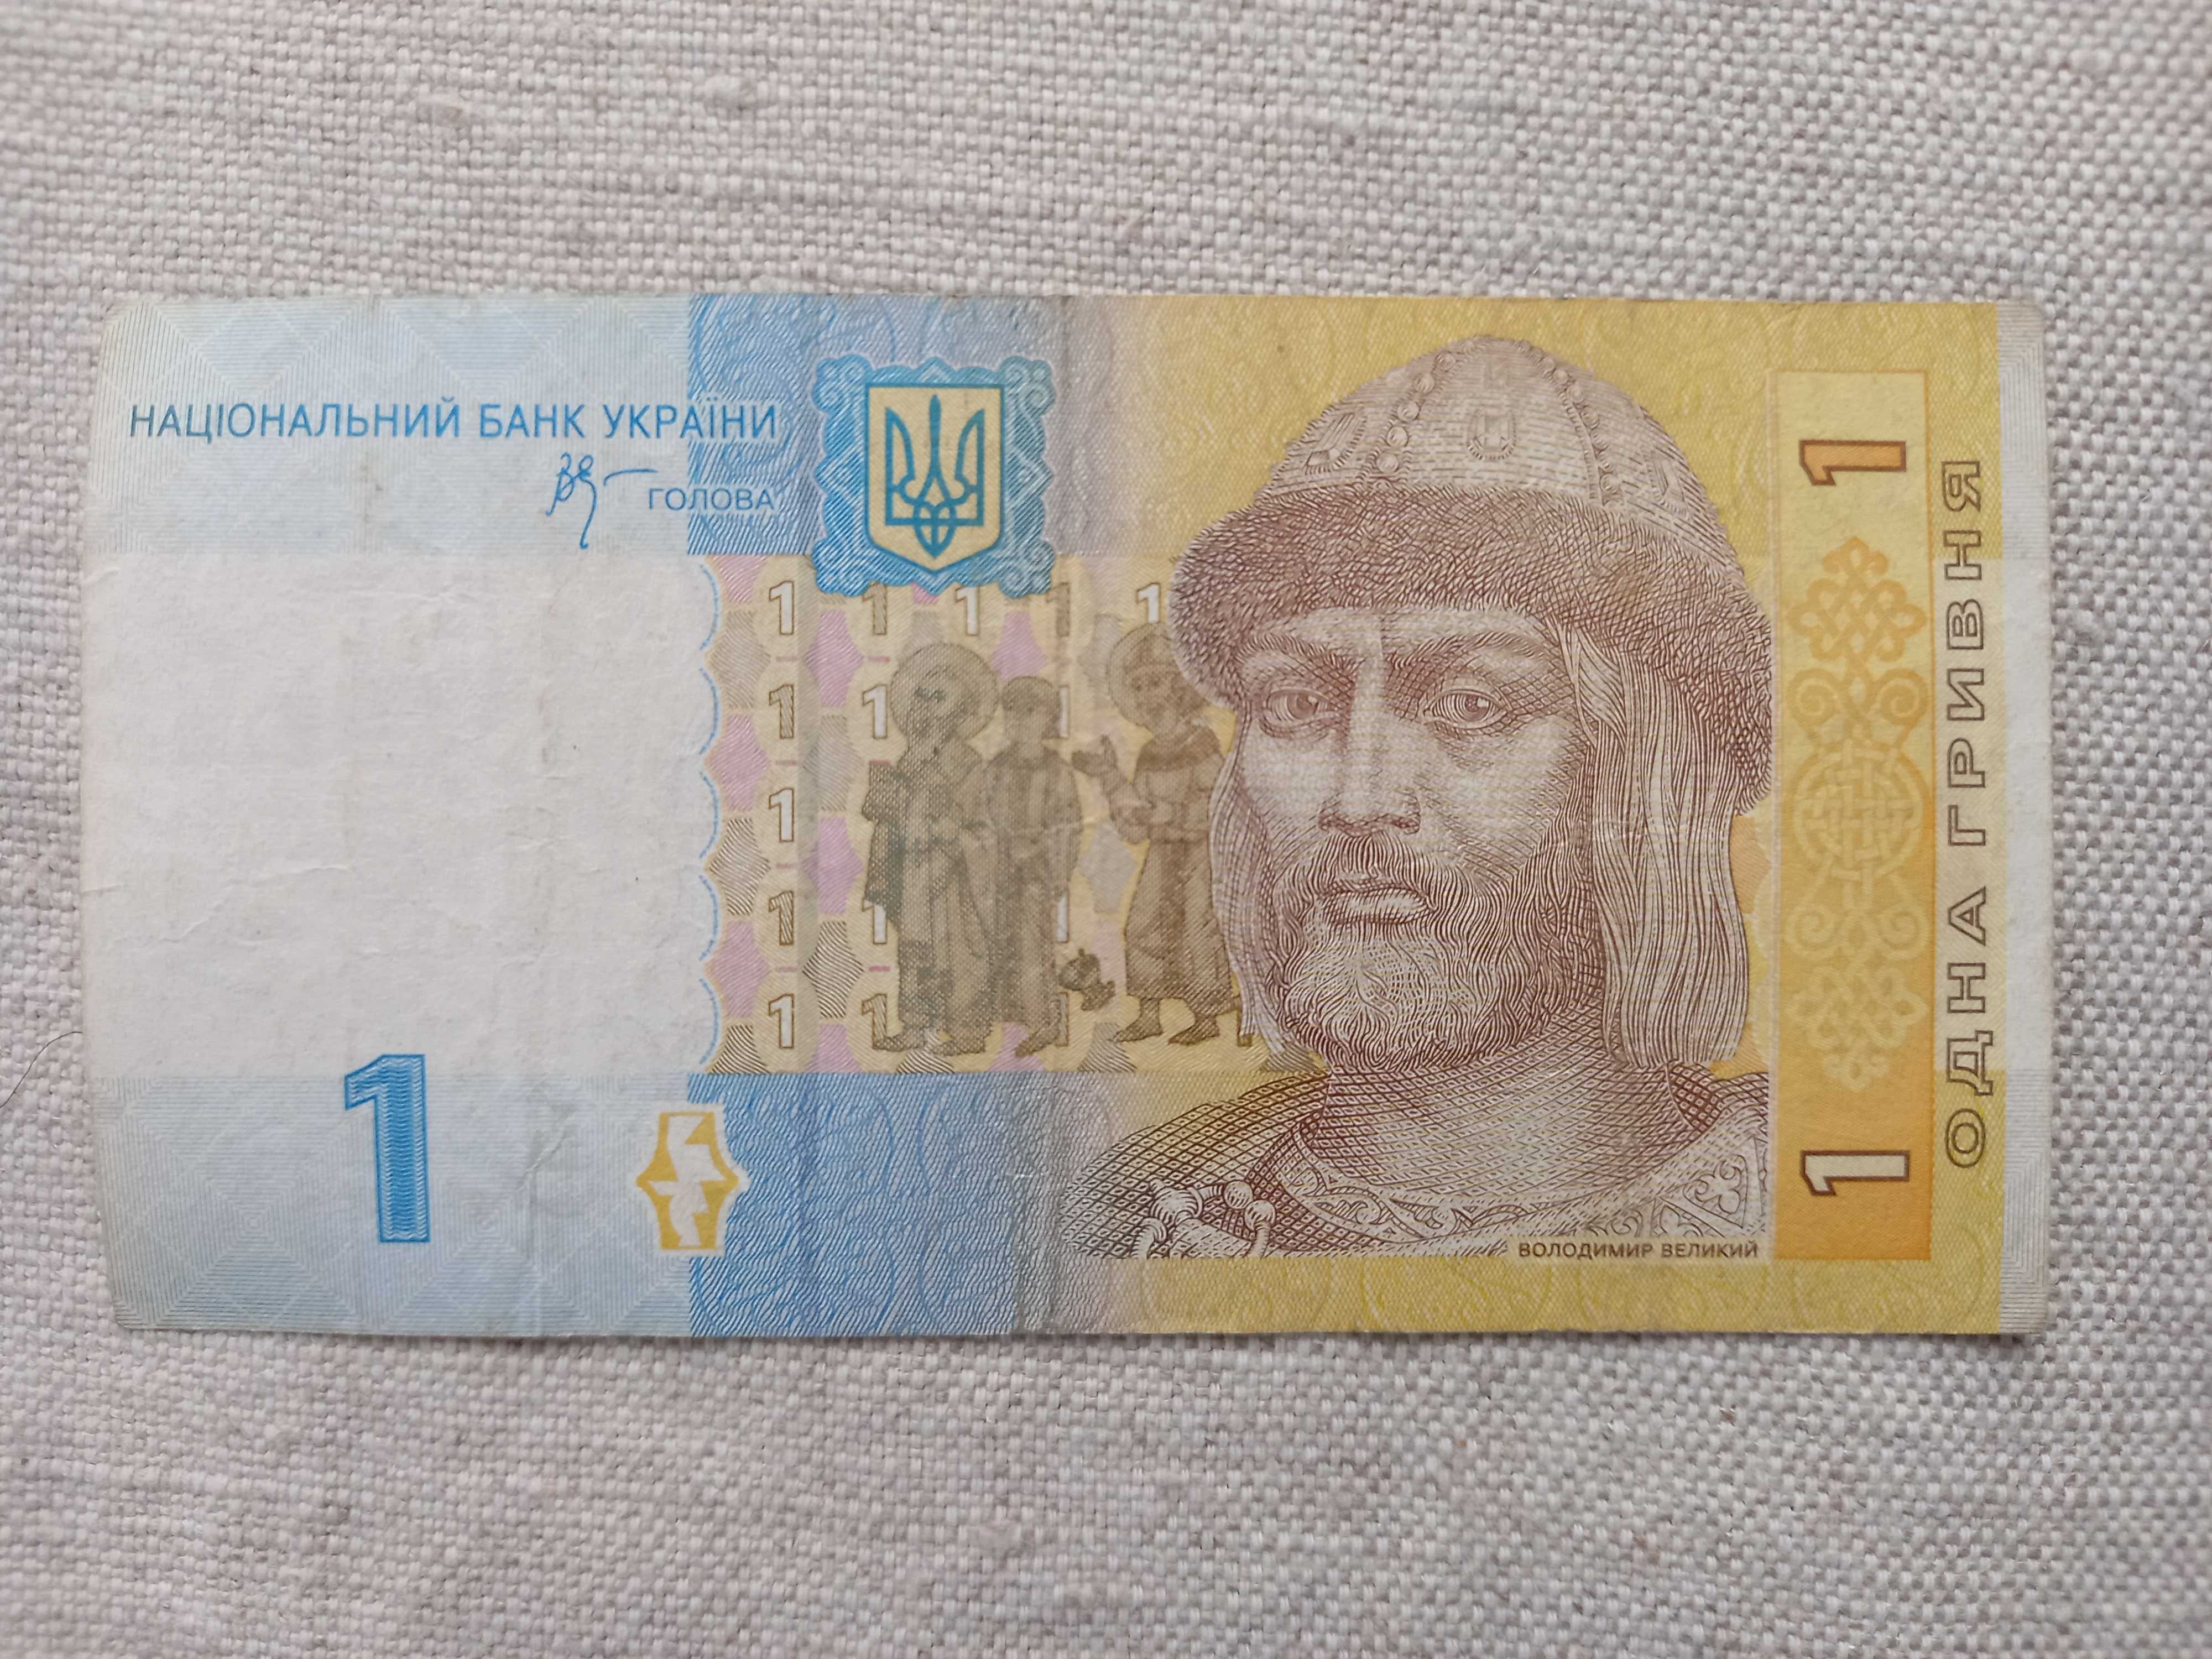 UKRAINA banknot 1 Hrywna z 2006 roku